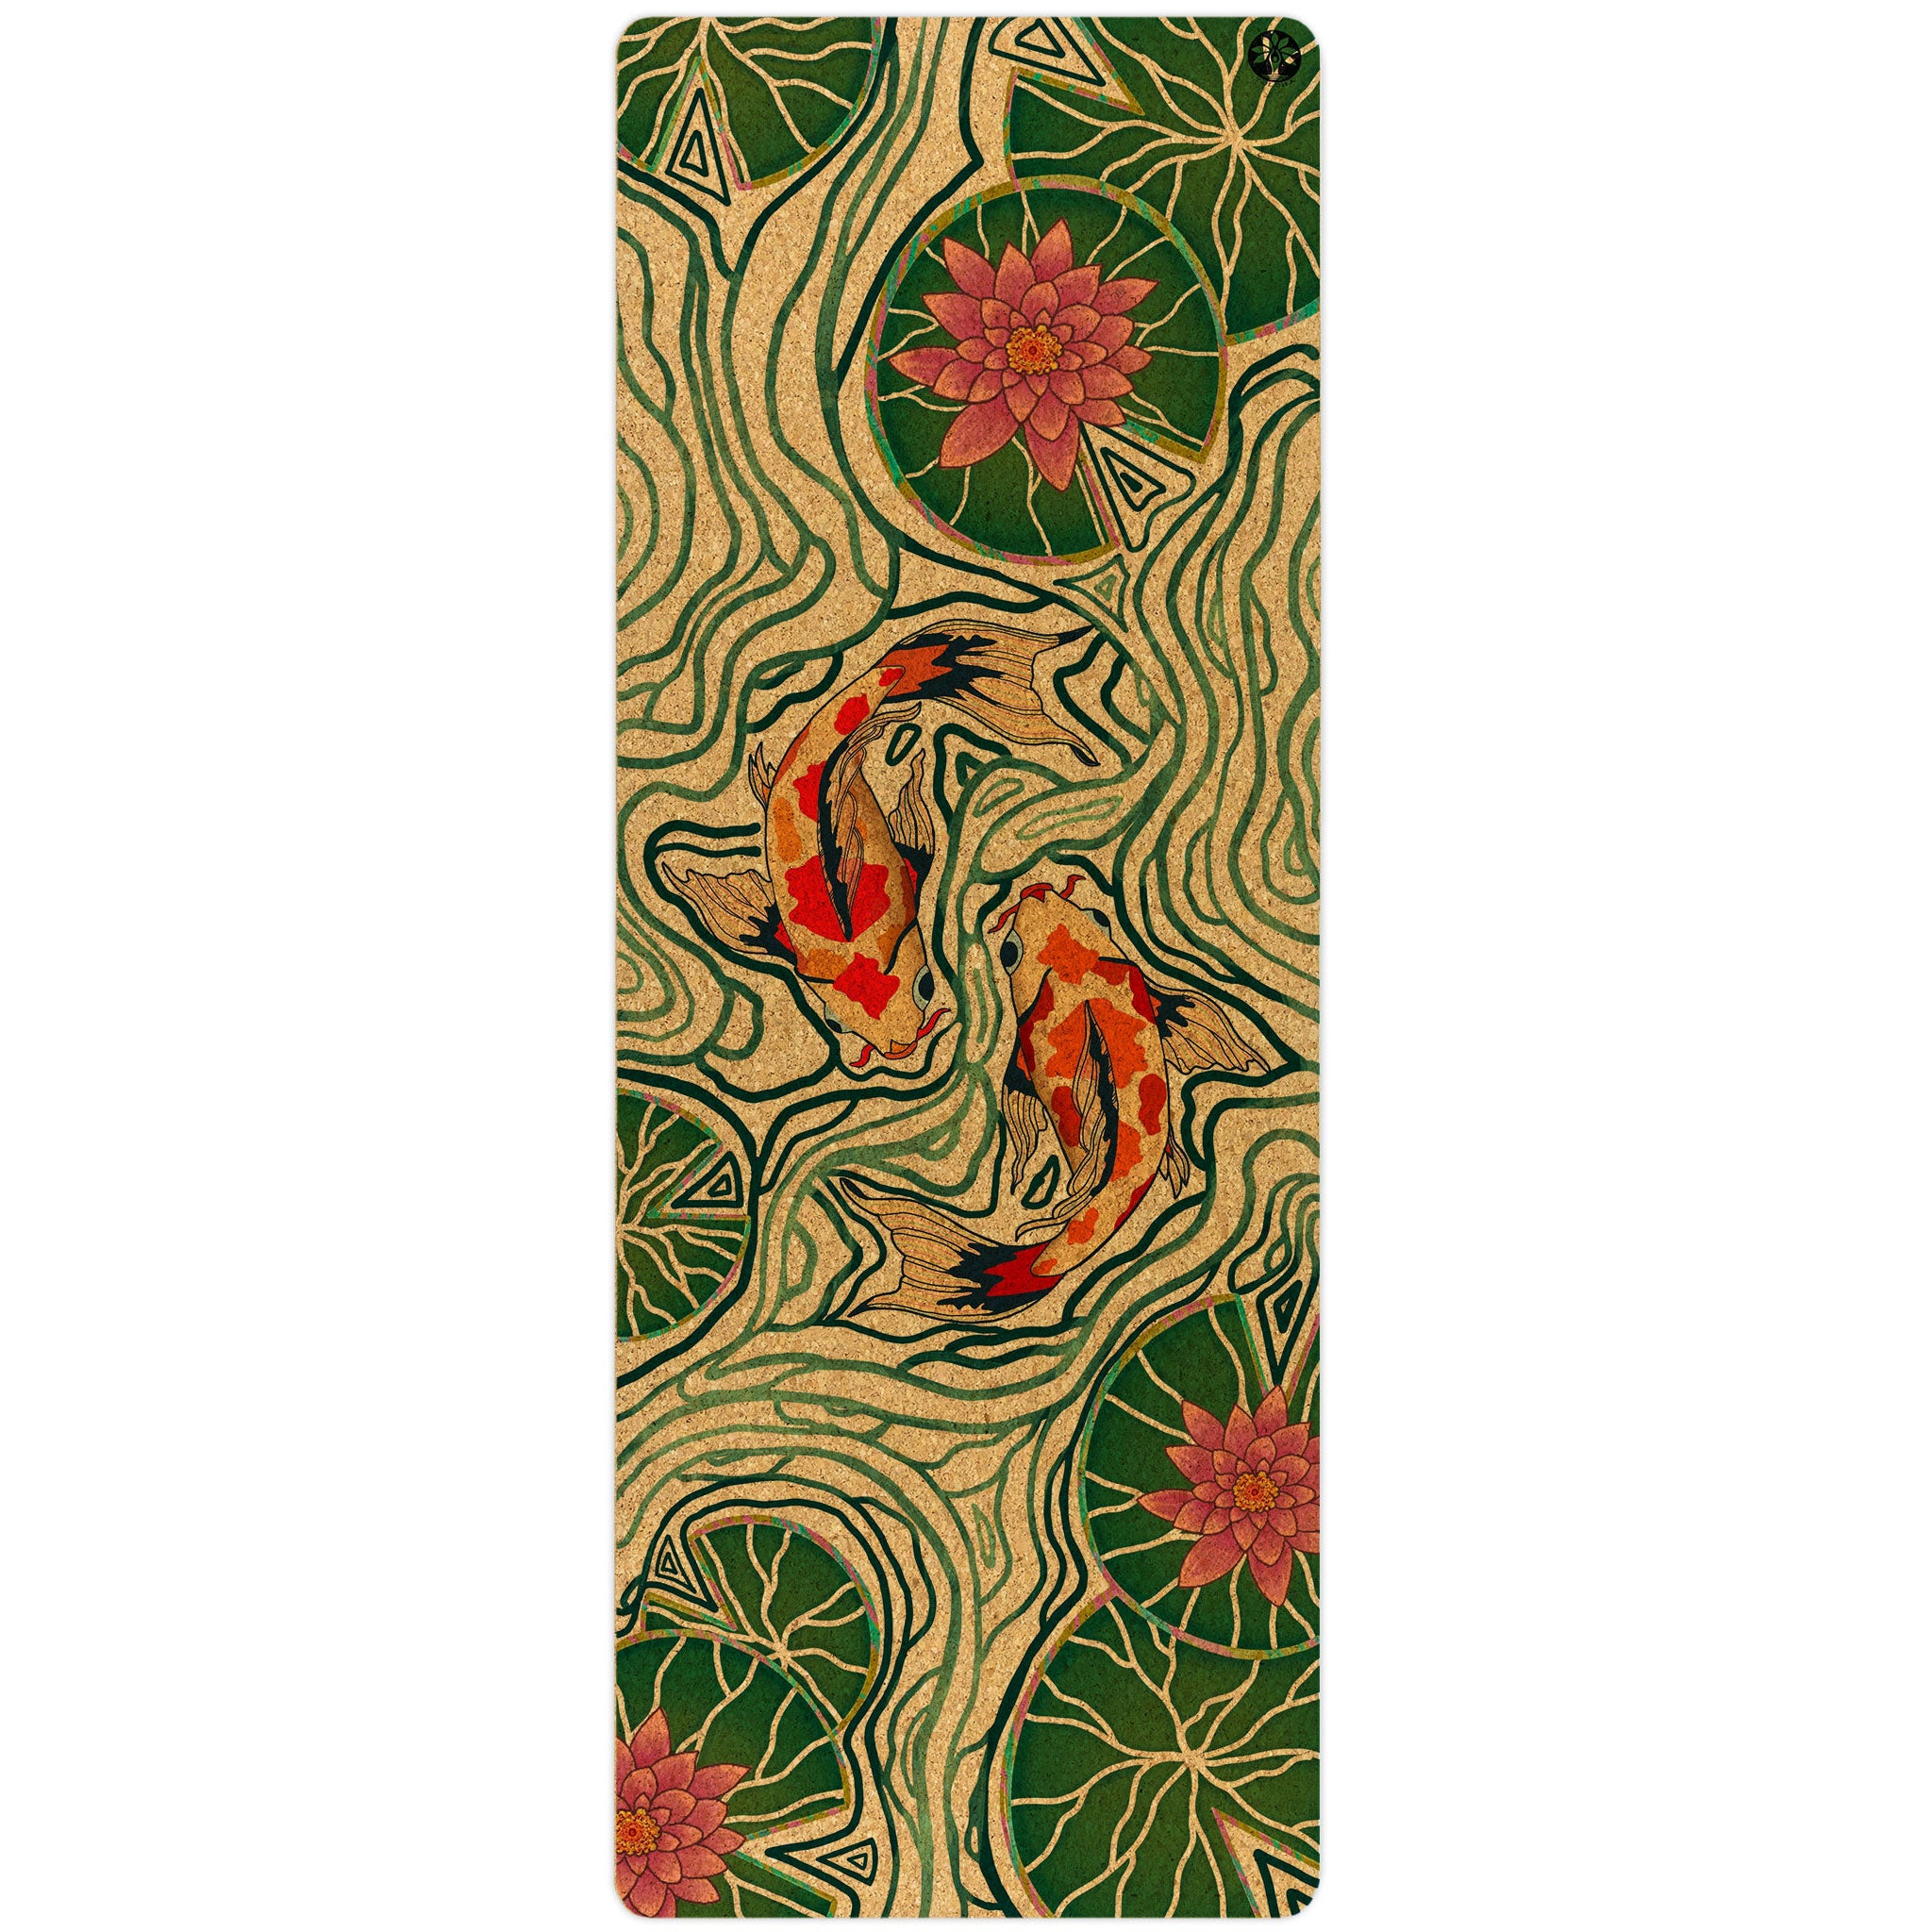 The Original Natural Non-Slip Cork Yoga Mat by Yoloha 72 x 26